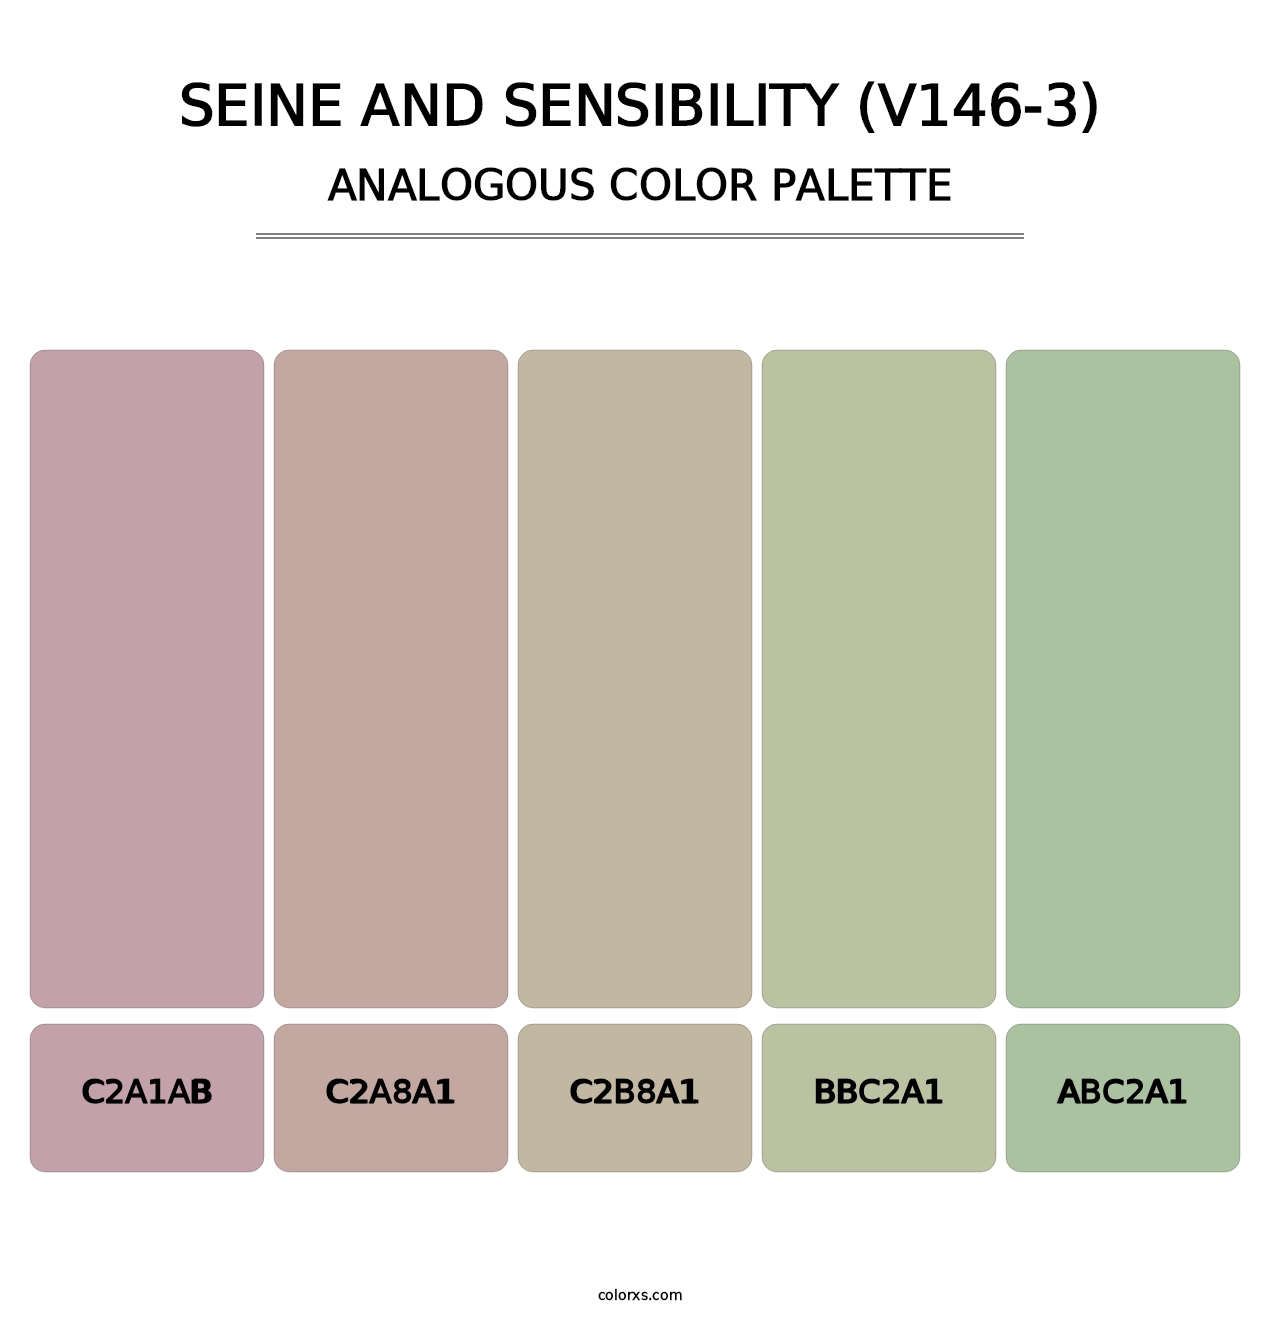 Seine and Sensibility (V146-3) - Analogous Color Palette